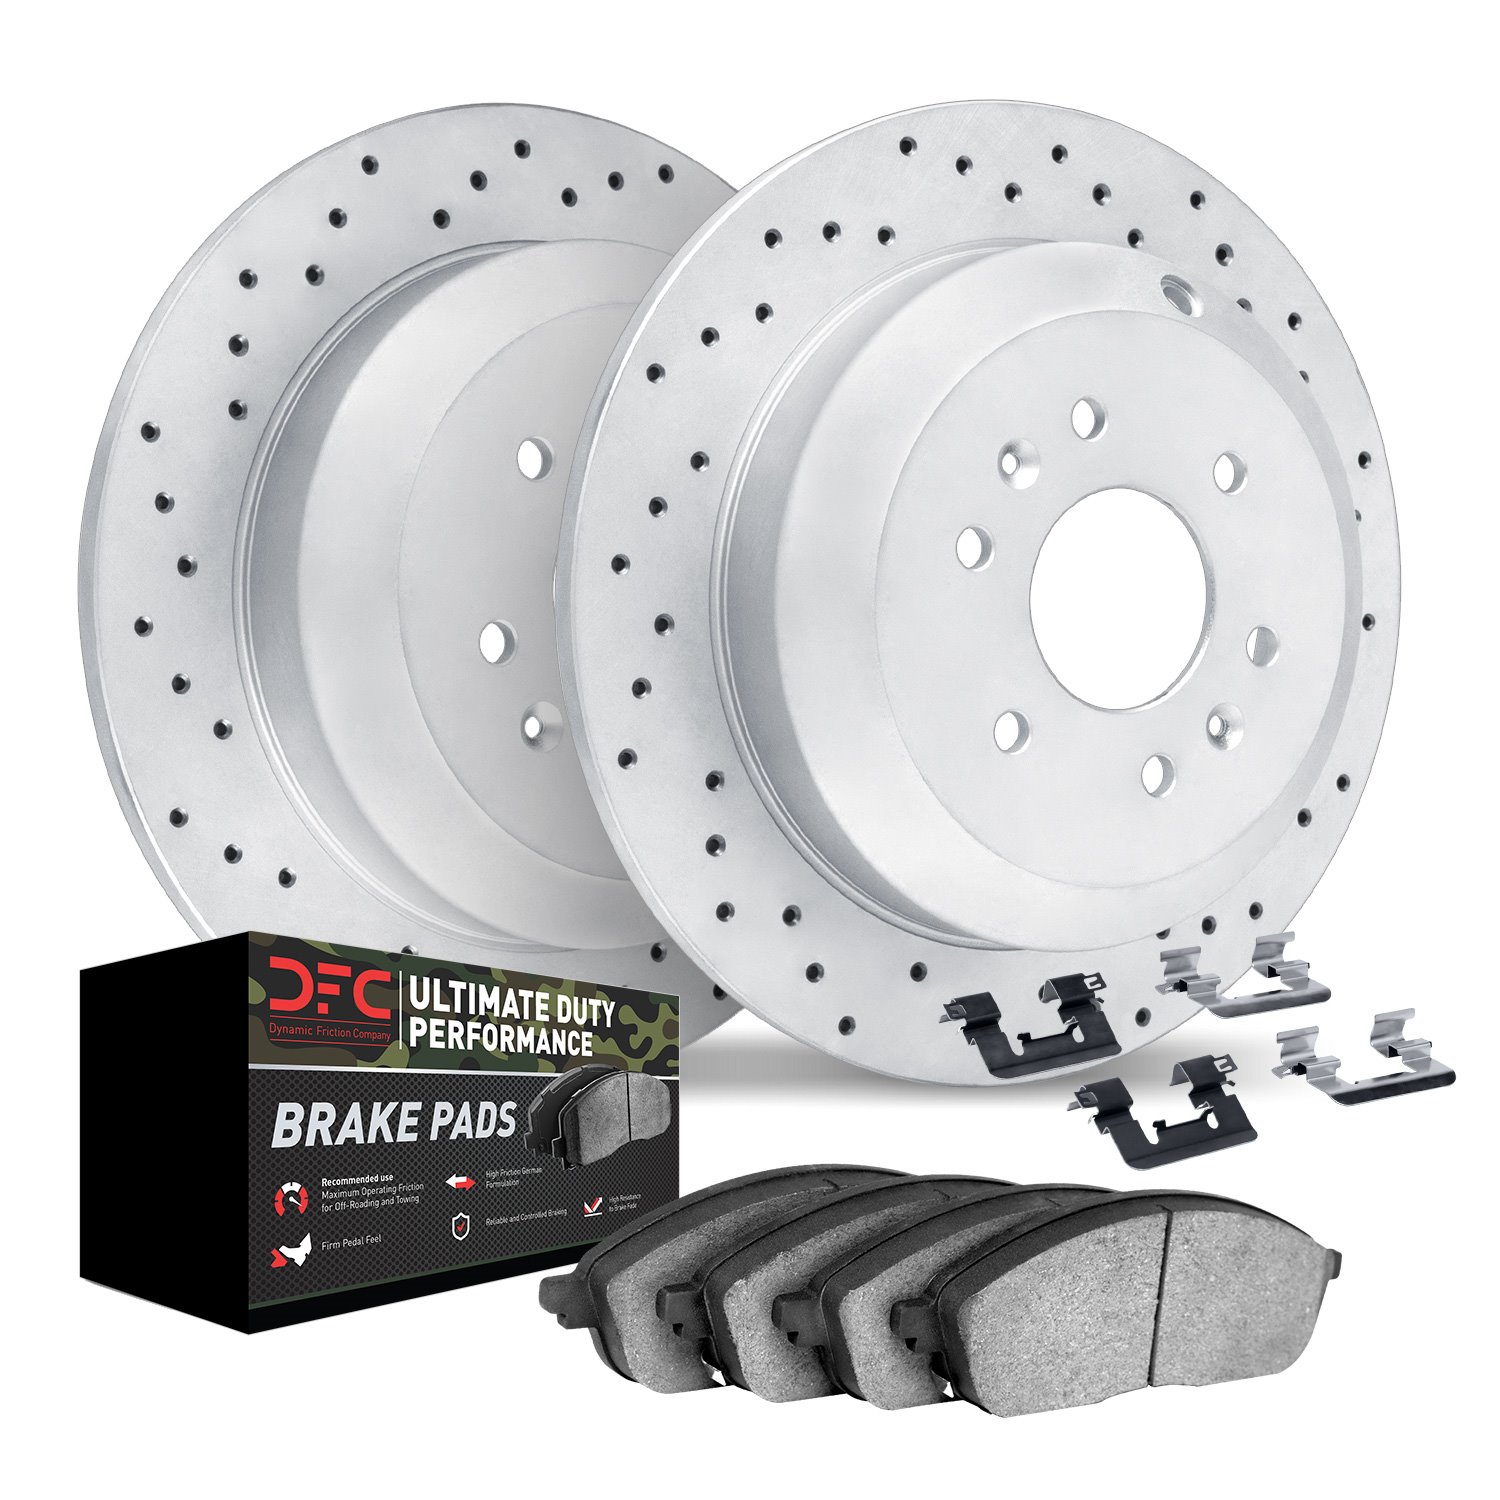 2412-67000 Geoperformance Drilled Brake Rotors with Ultimate-Duty Brake Pads Kit & Hardware, 2004-2015 Infiniti/Nissan, Position